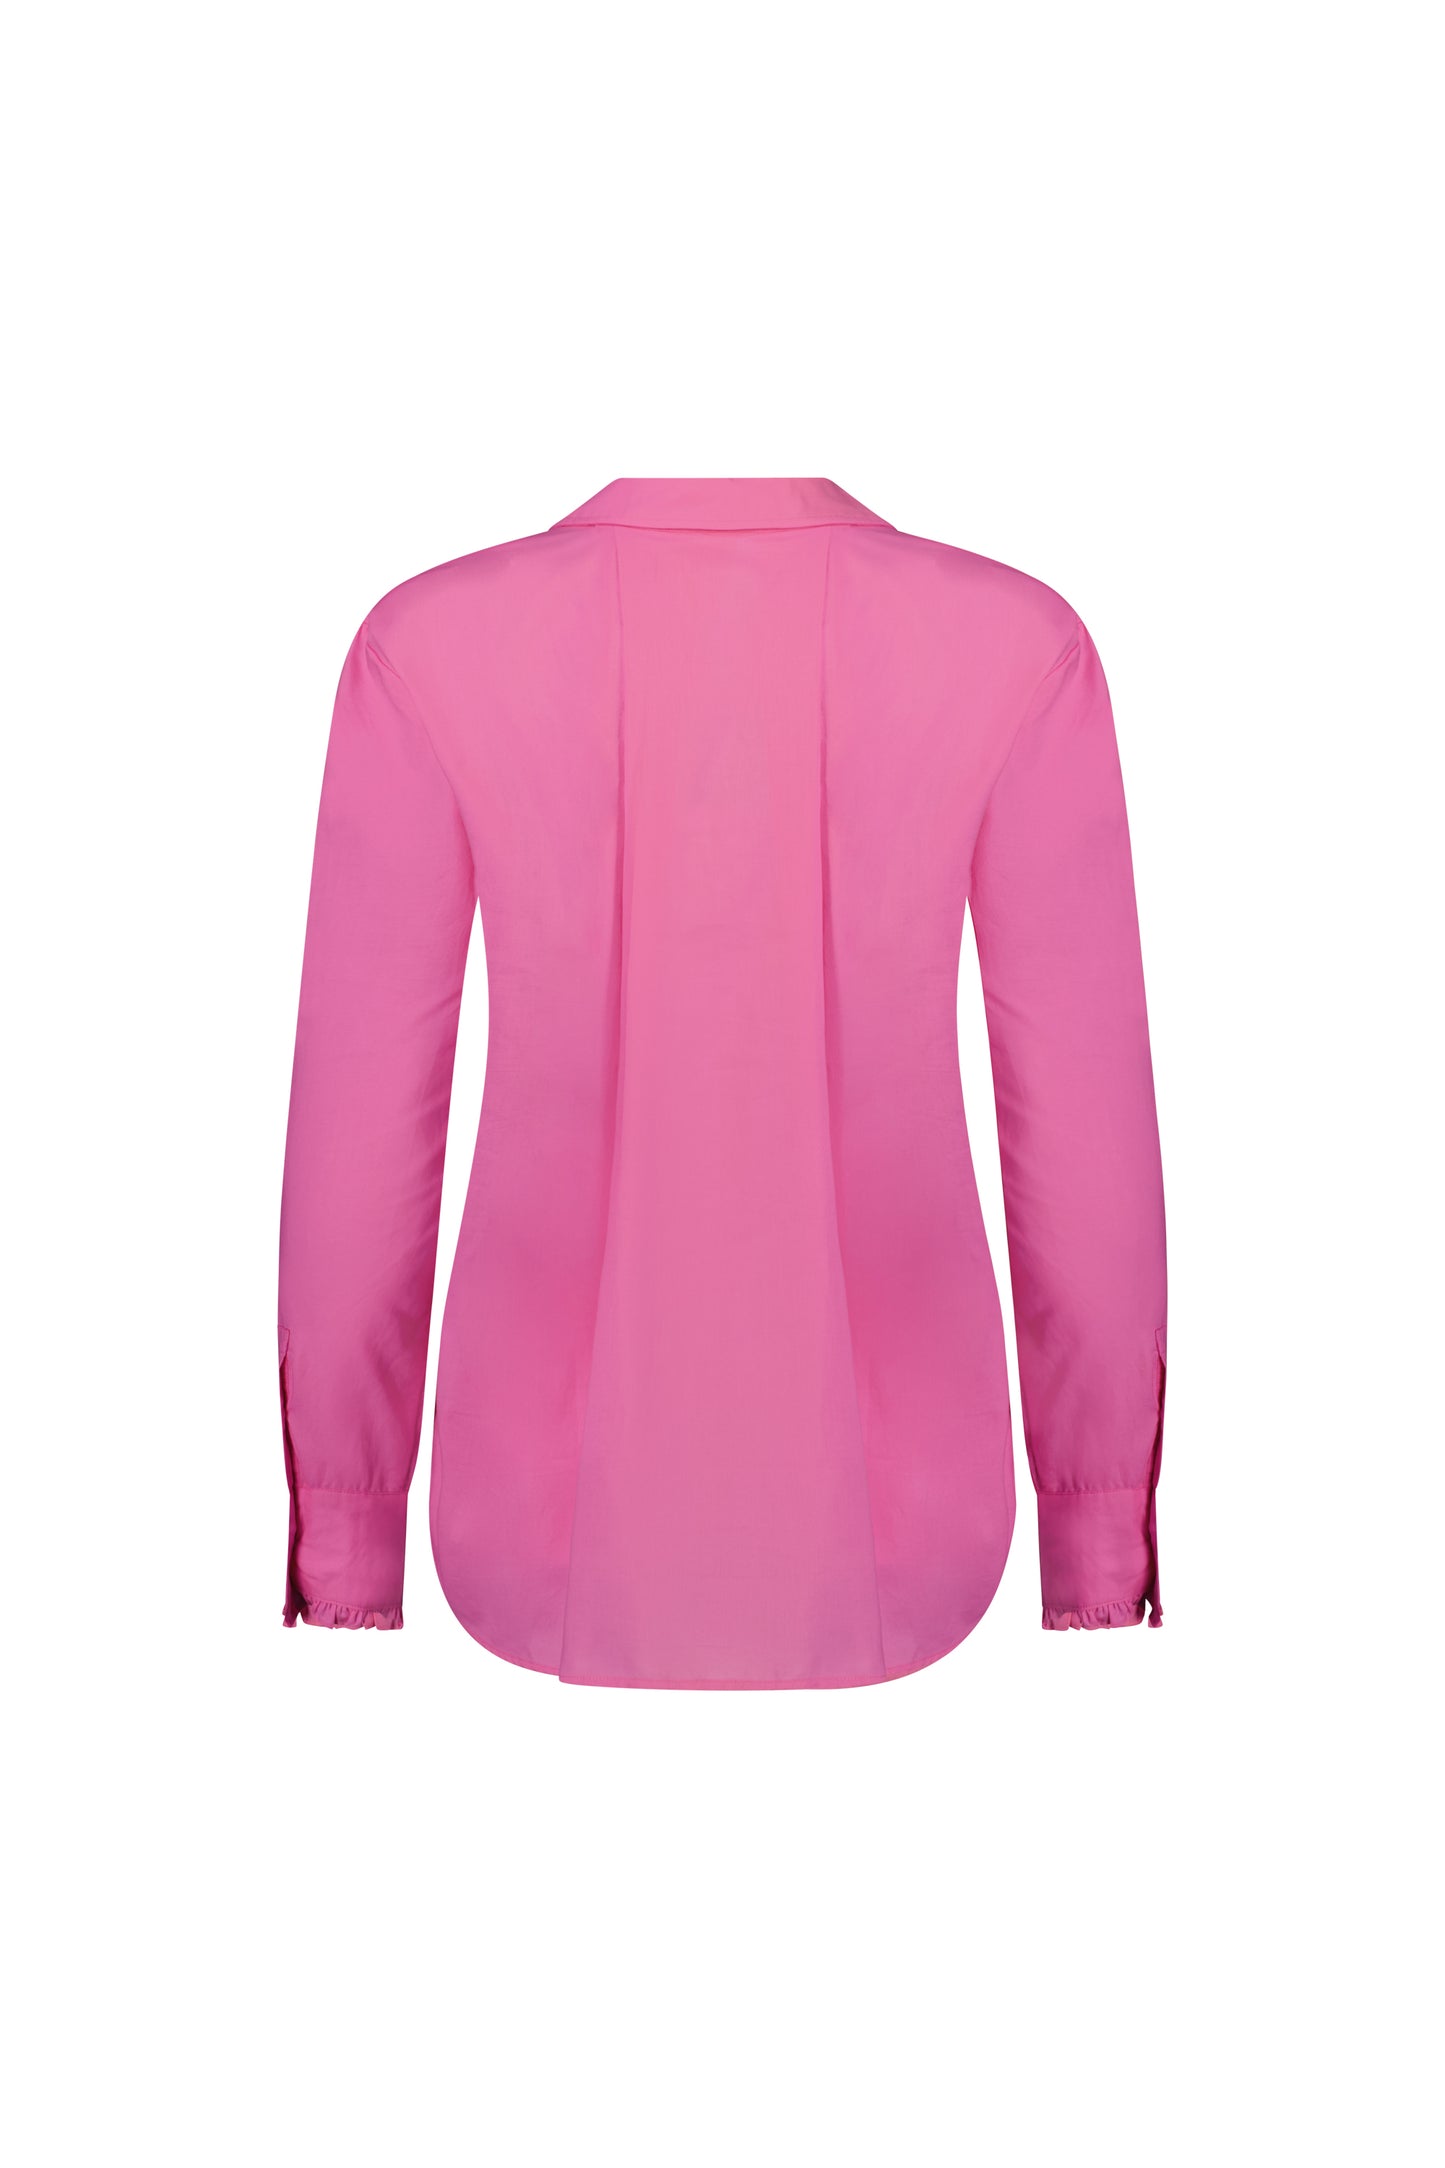 Vassalli - 4415 Cotton Shirt with Back Neck Pleat - Pink Lemonade - 70% Off